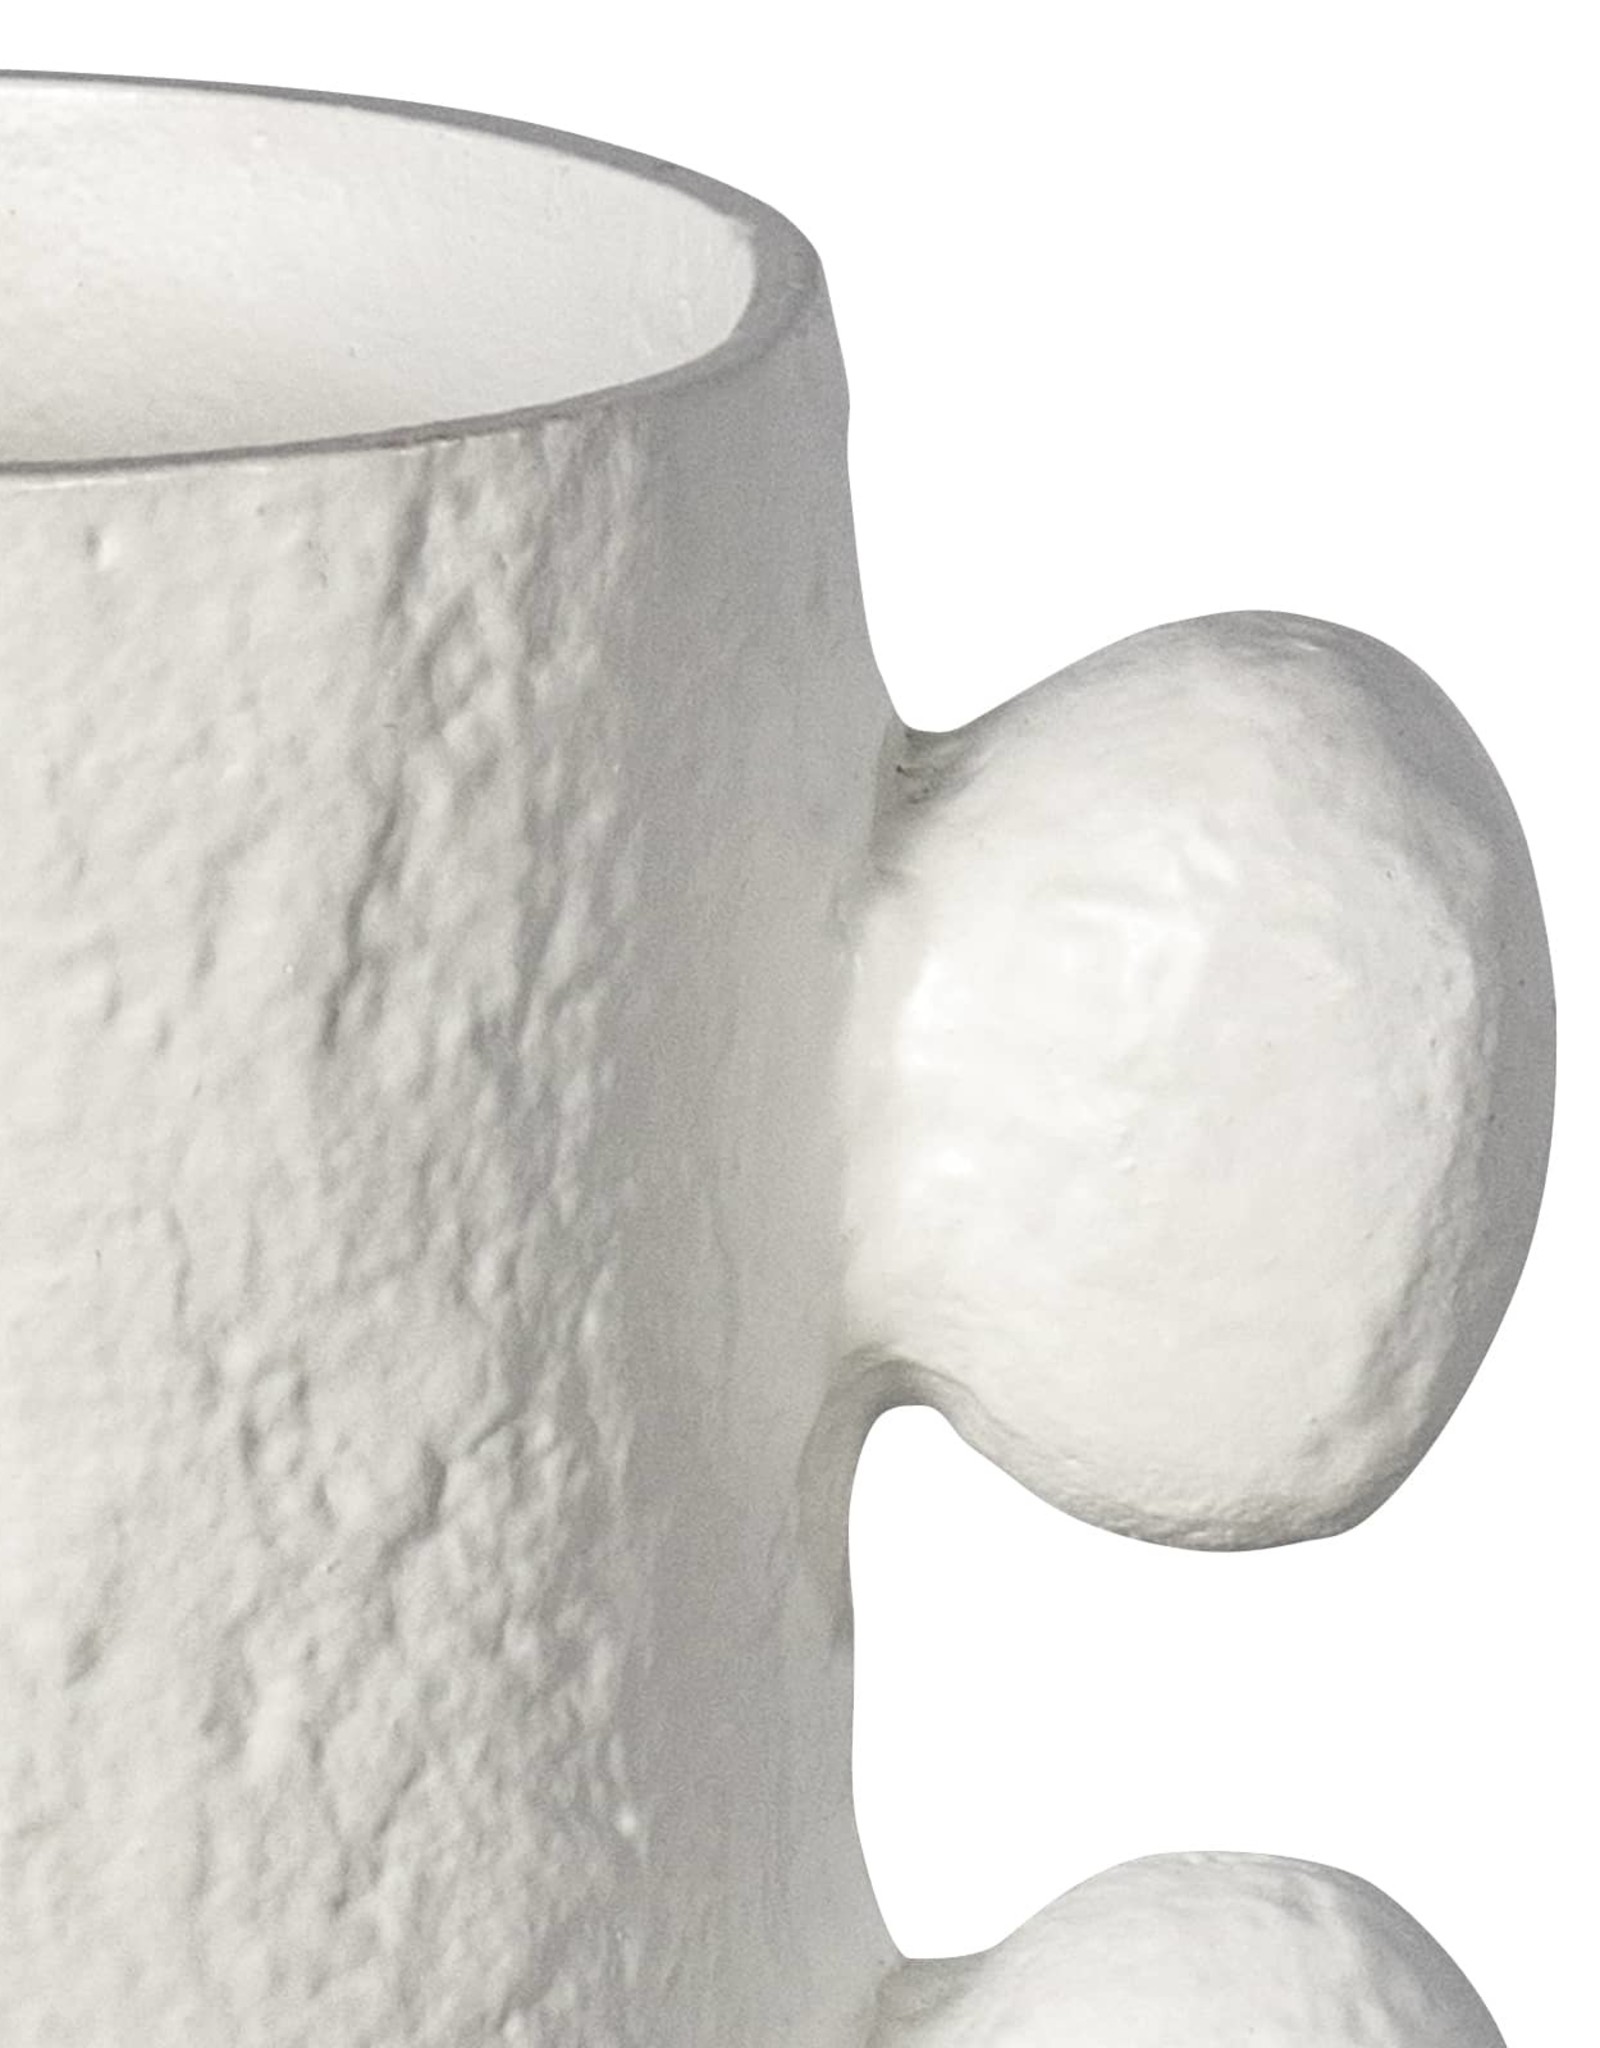 Regina Andrew Design Sanya Metal Vase Small (White)